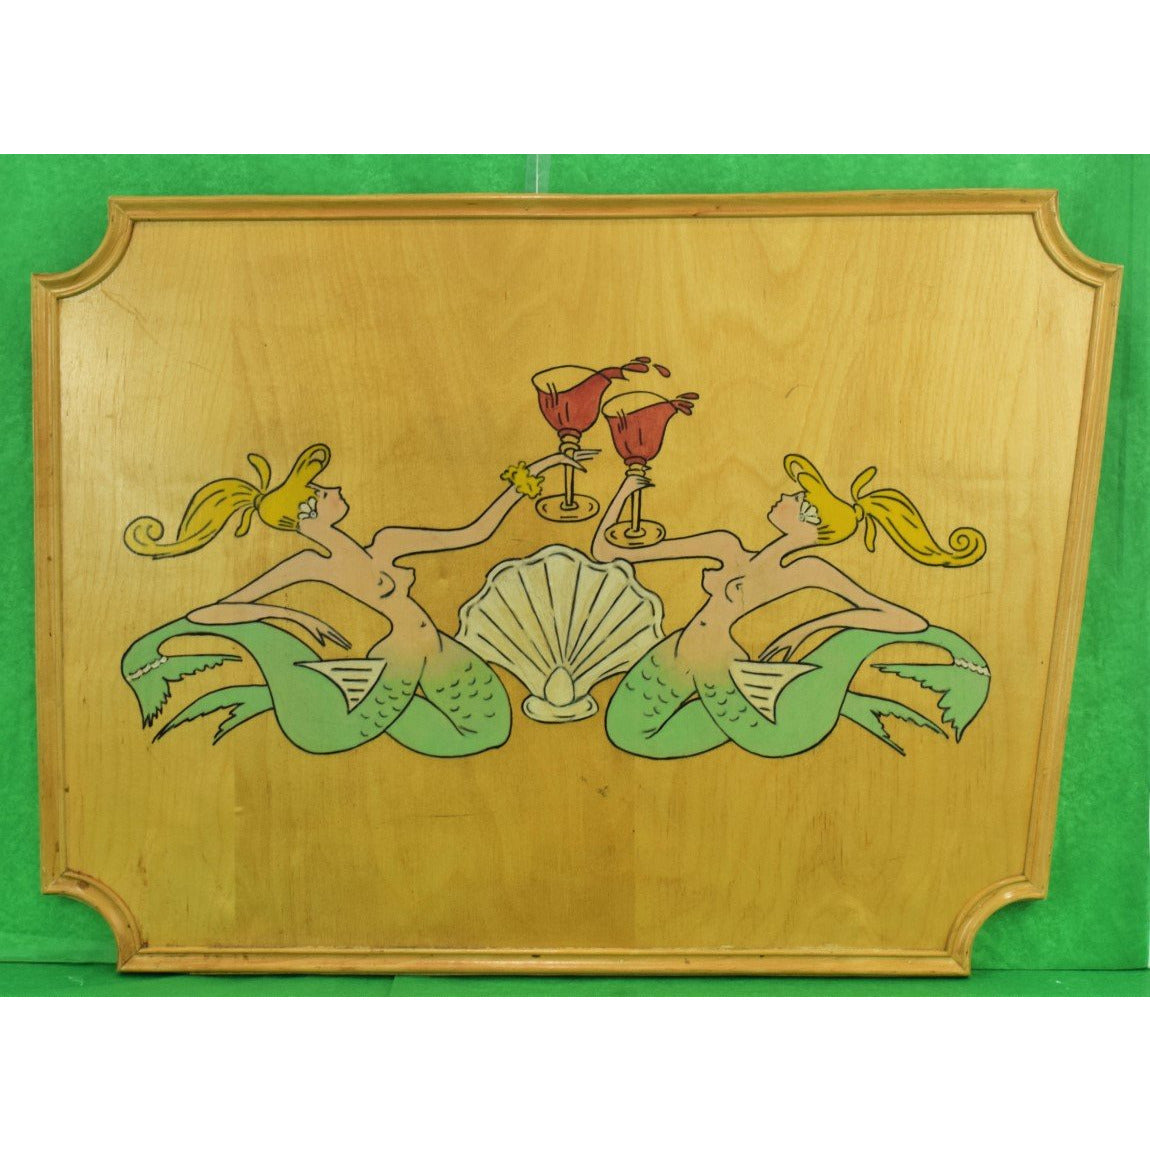 Pair of Hand-Painted Toasting Mermaids on Oak Plaque